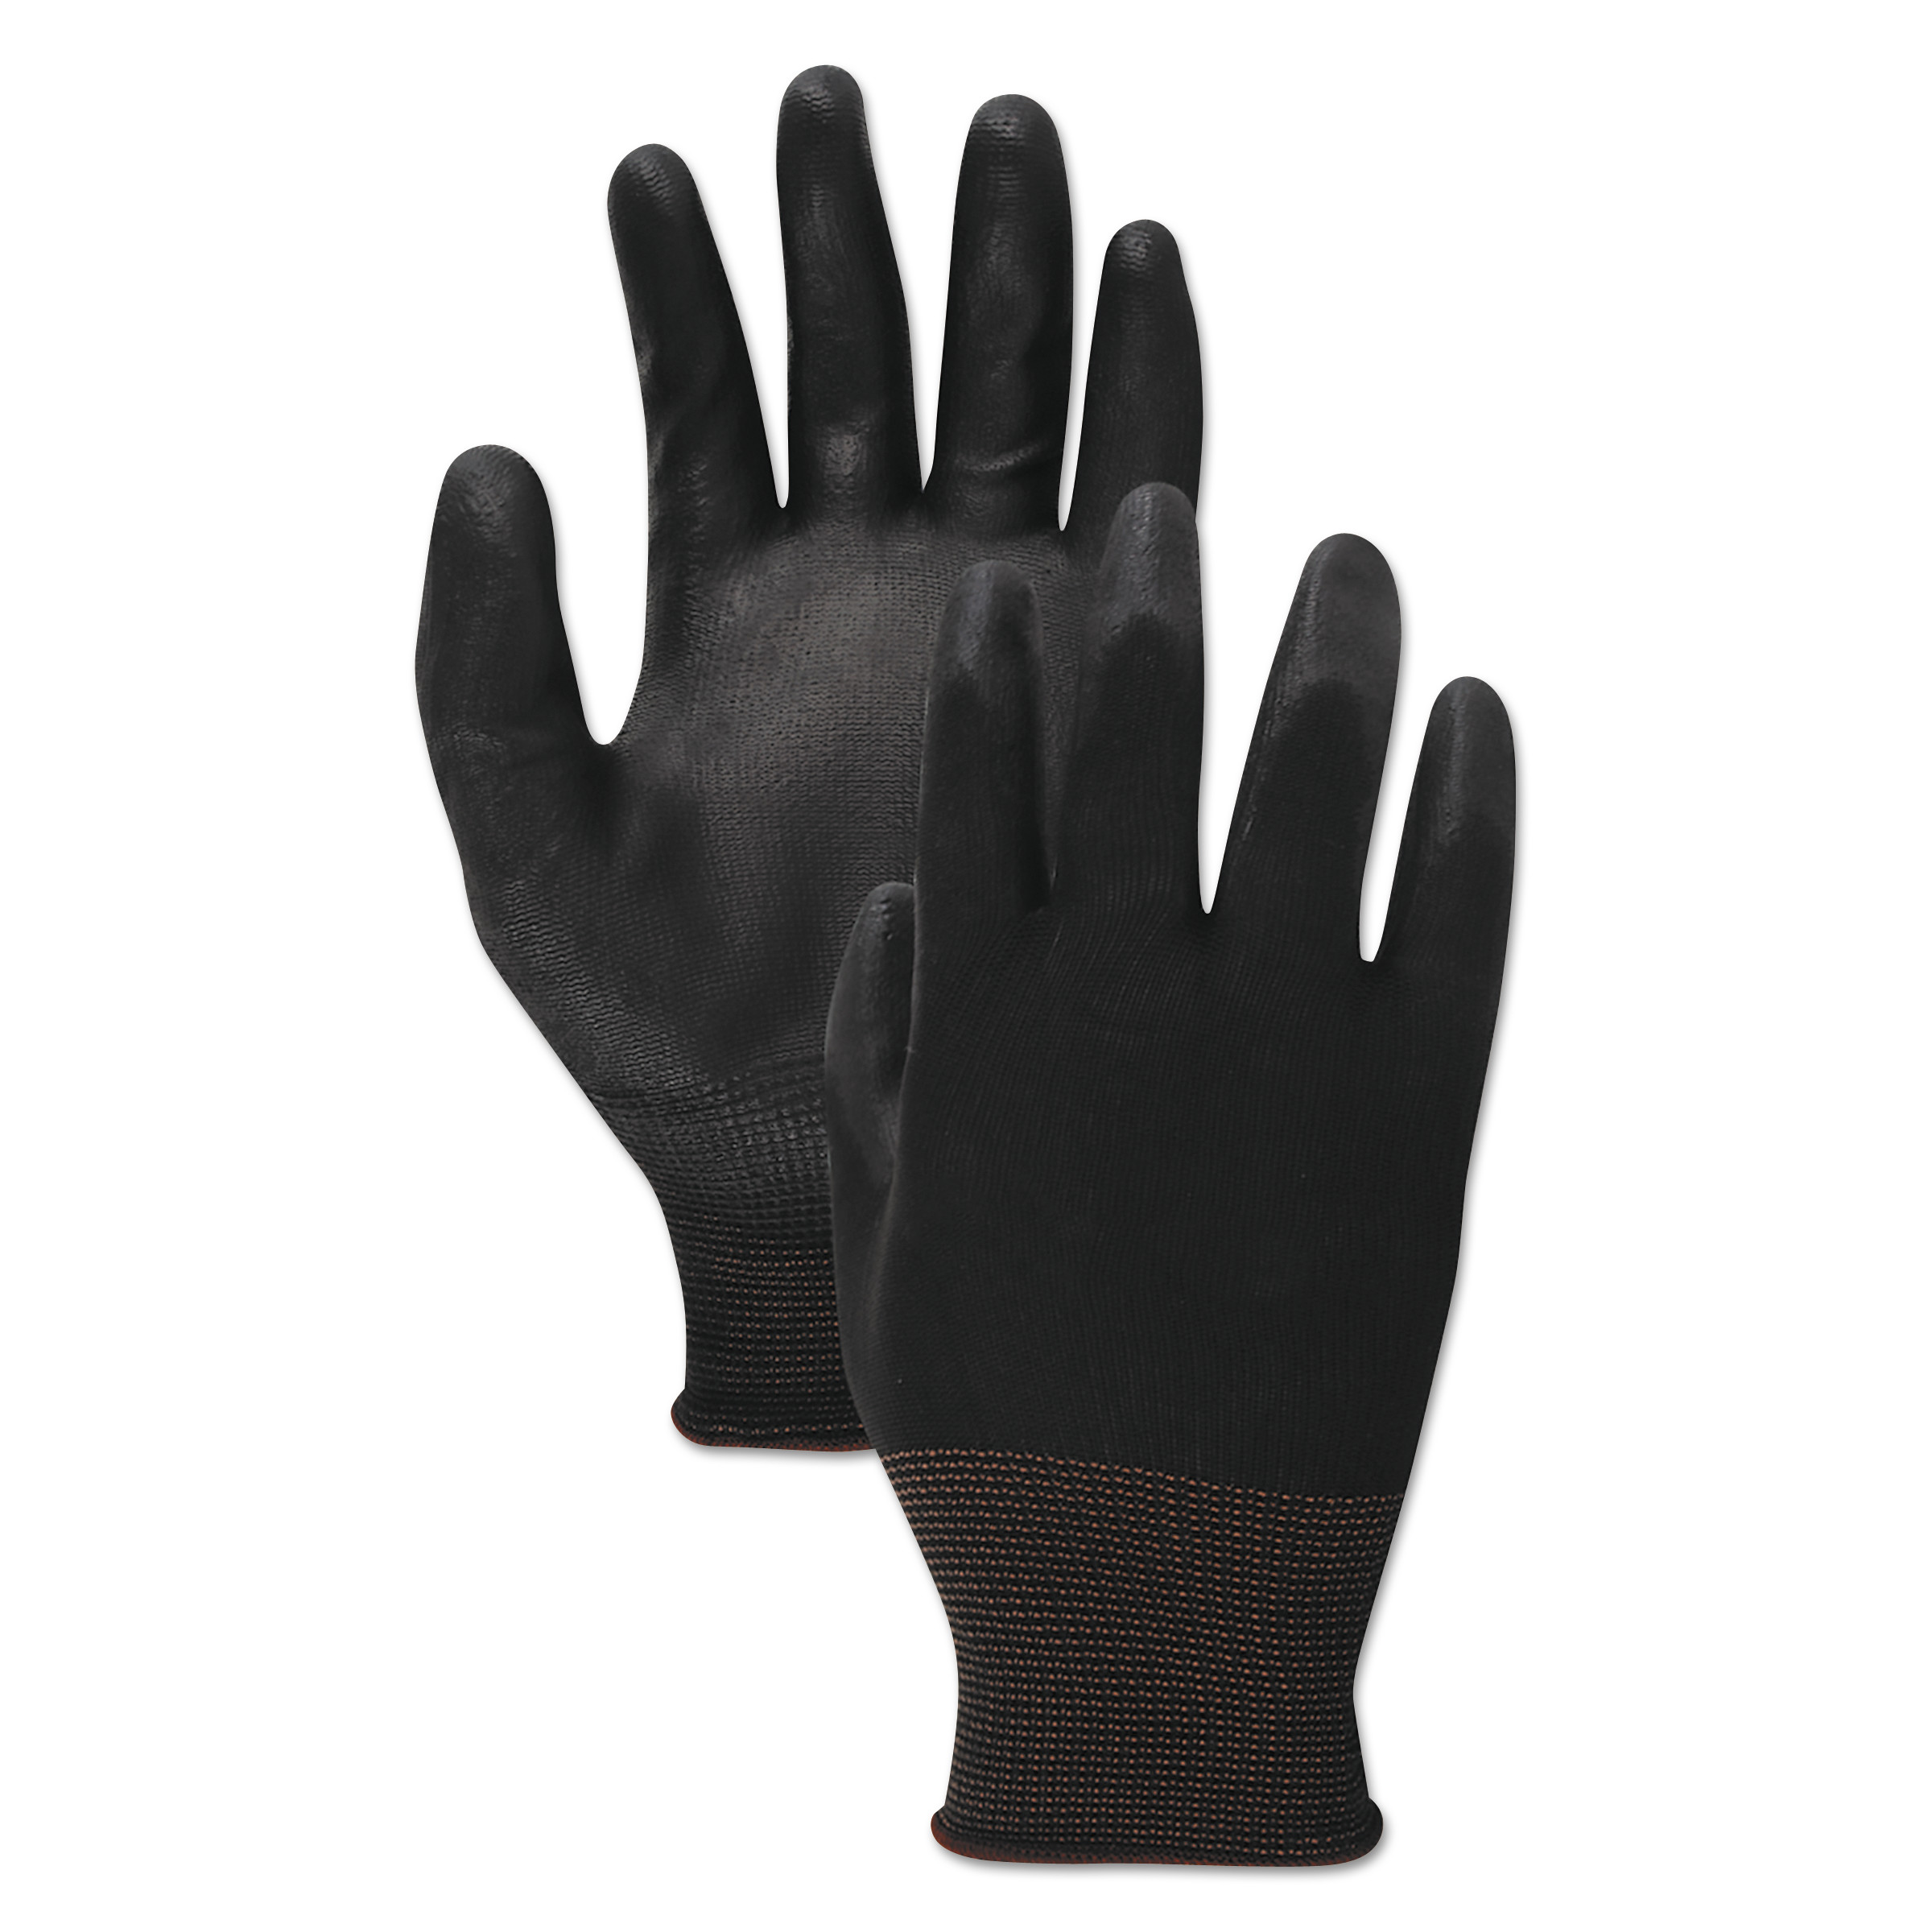 Buy Work Gloves Online | Work Gloves at Bulk Prices